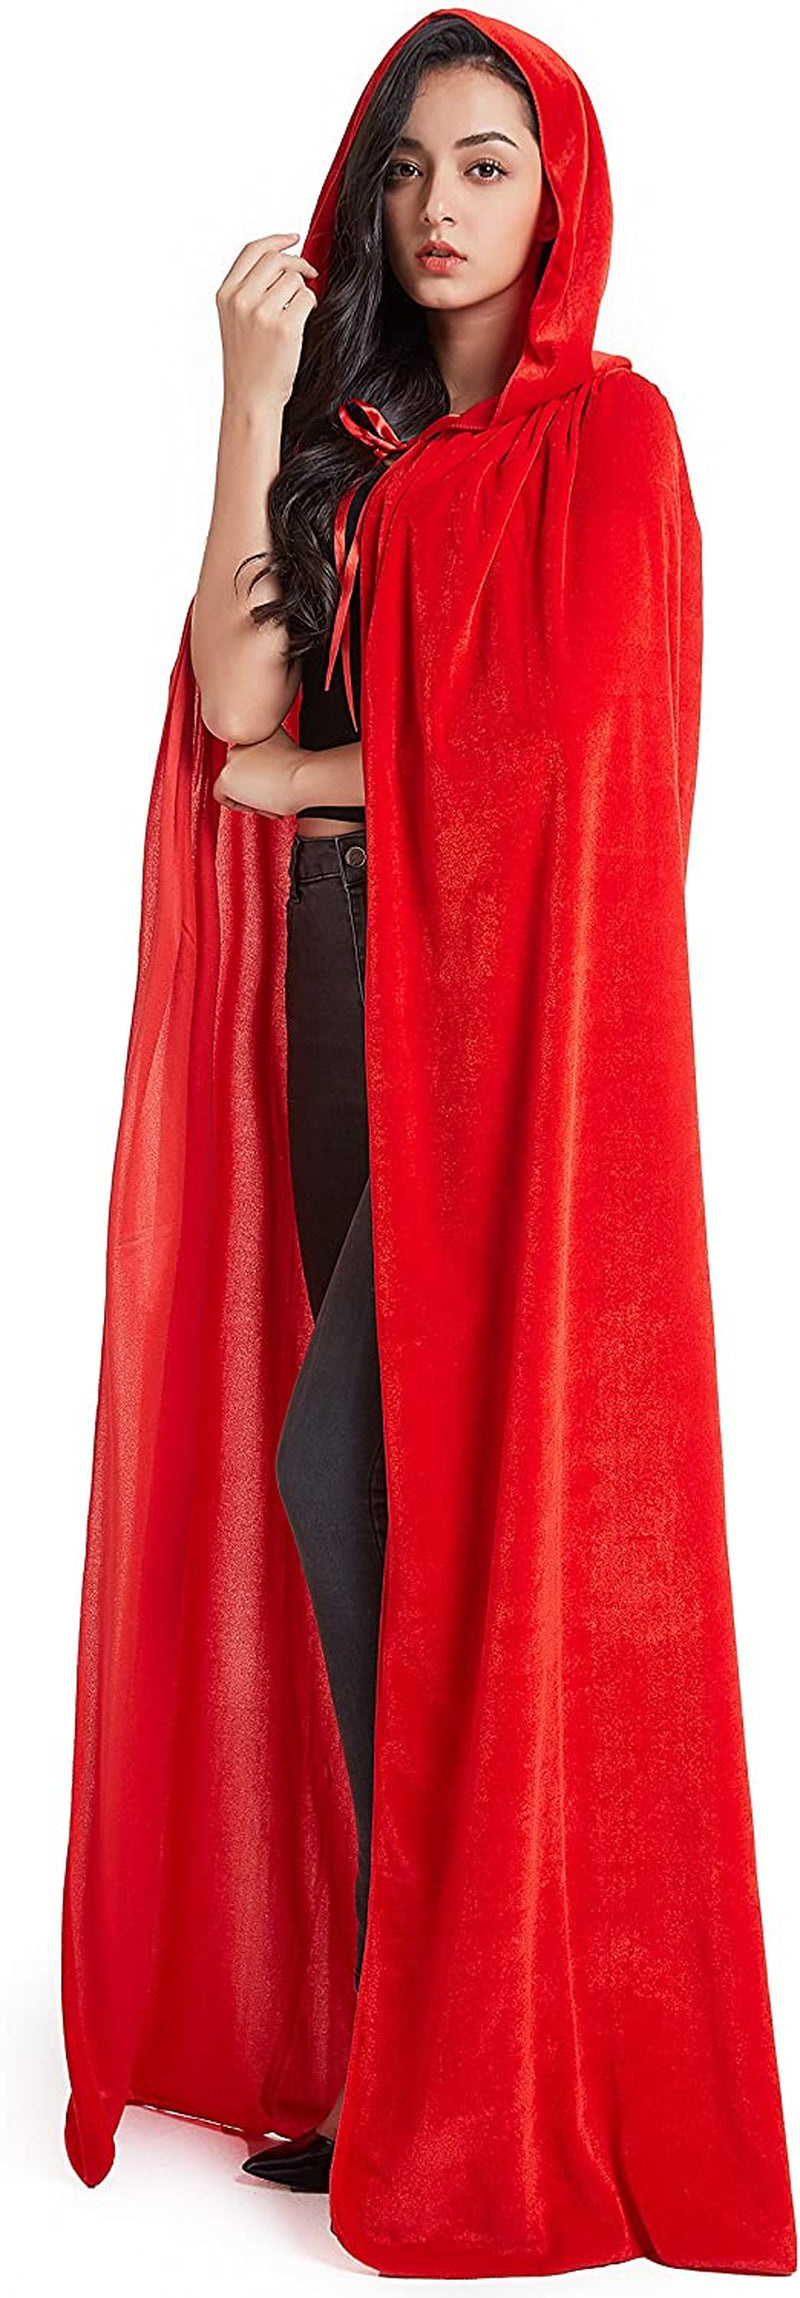 Crizcape Unisex Halloween Costume Cape Hooded Velvet Cloak for Men and Womens